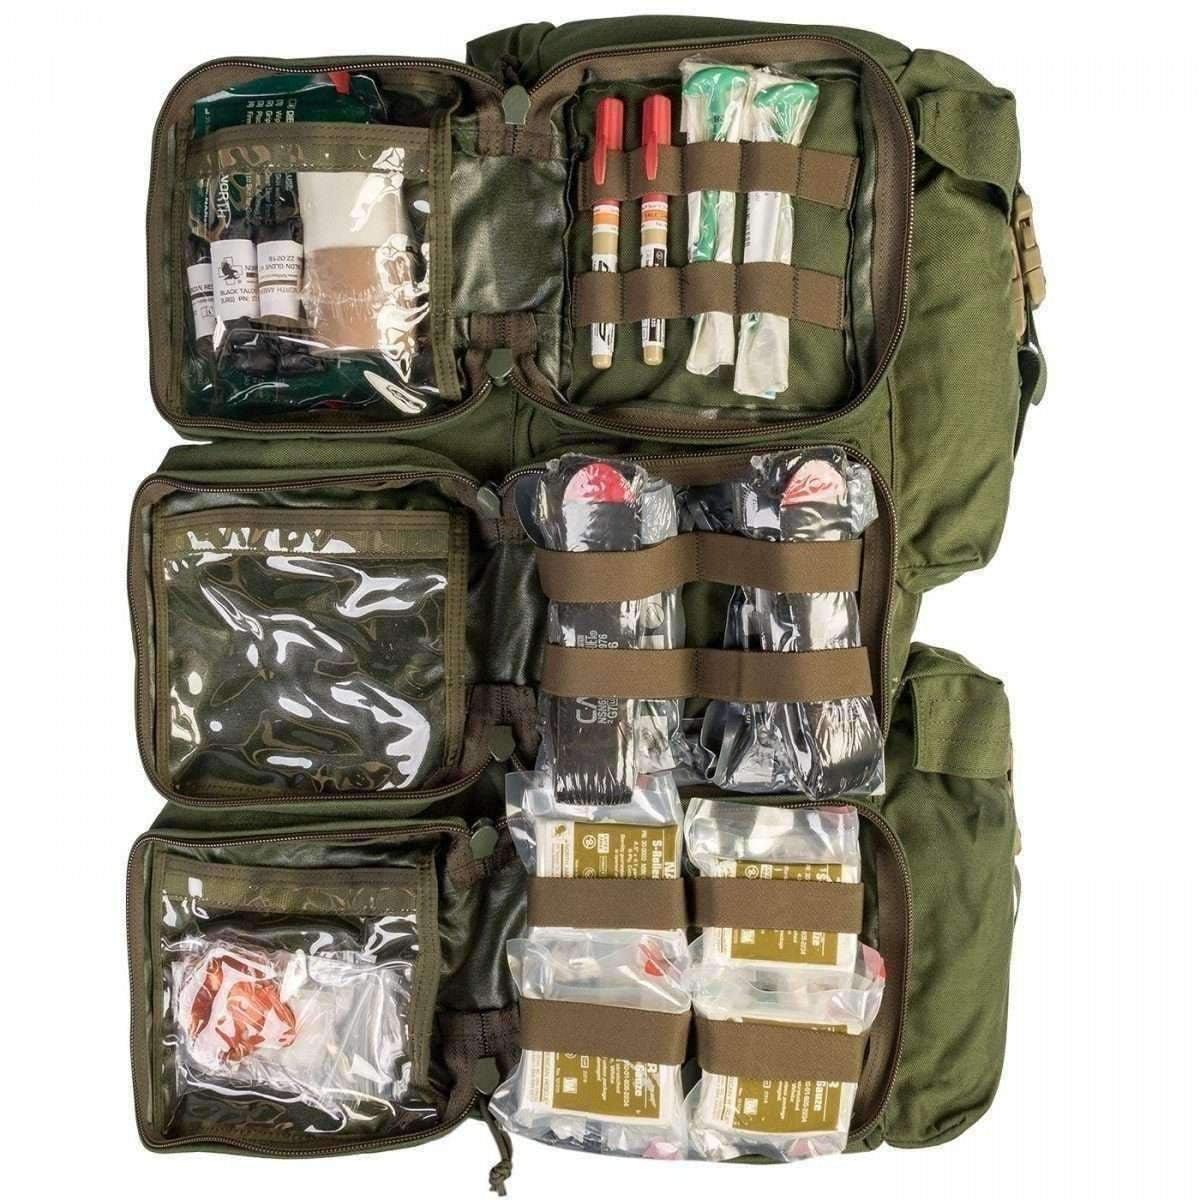 NAR Warrior Aid Litter Kit (WALK) Bag - Vendor